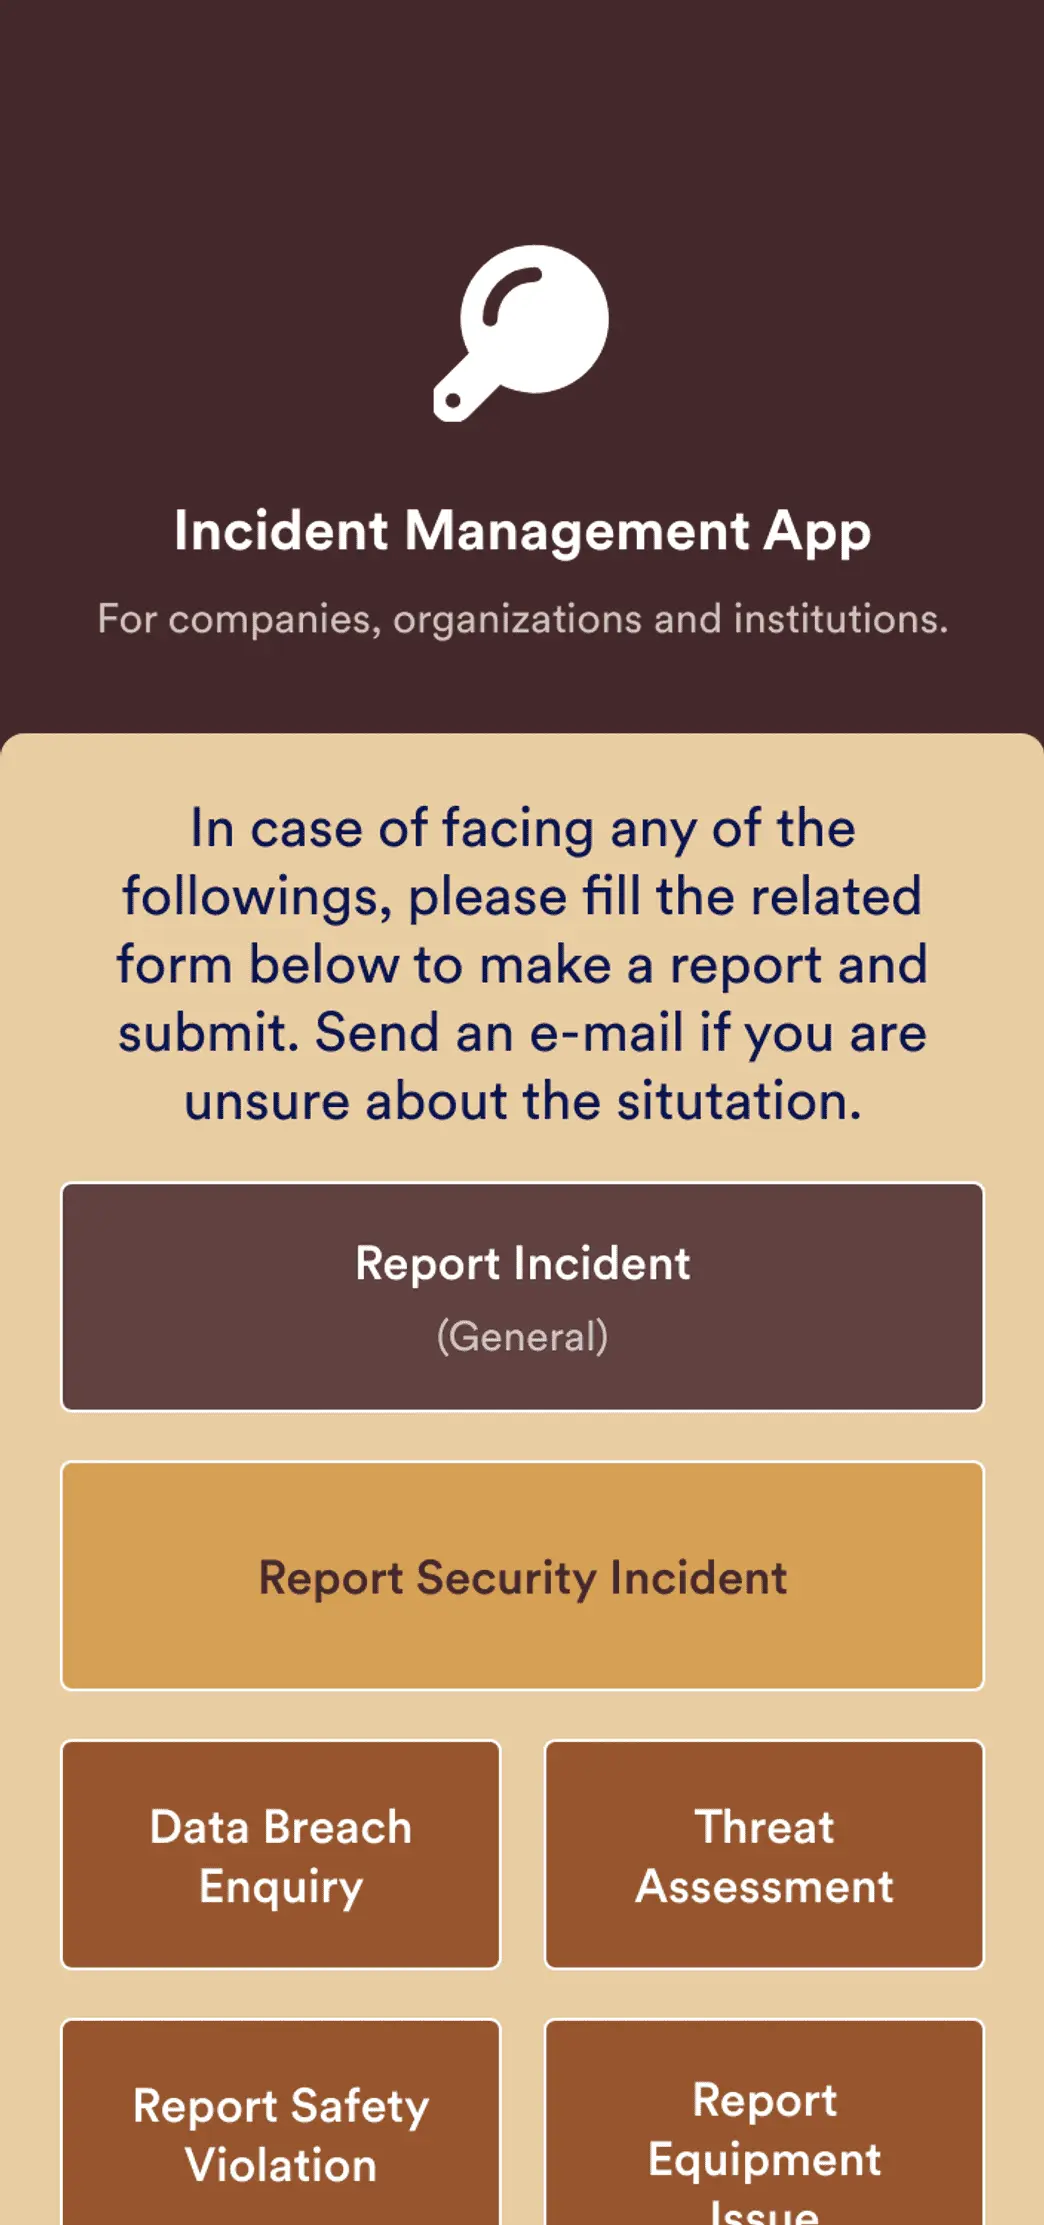 Incident Management App